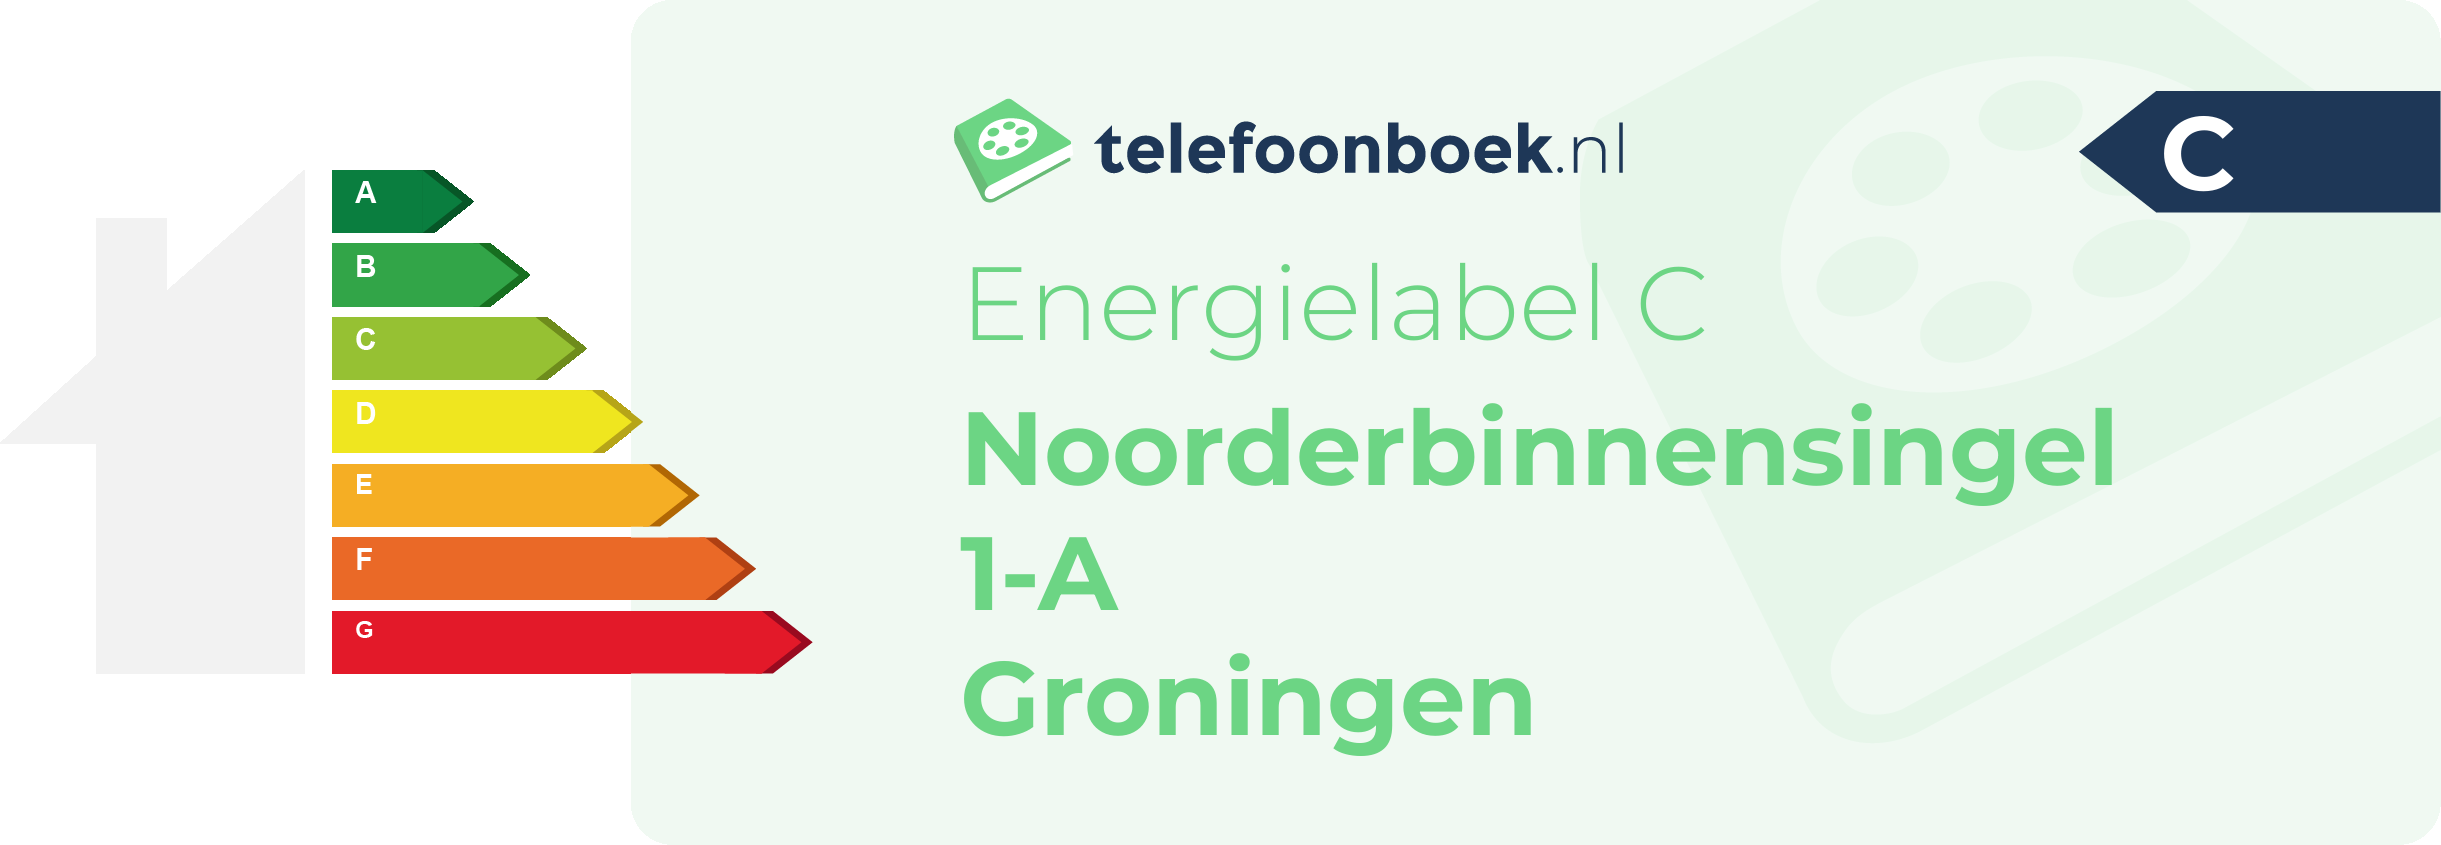 Energielabel Noorderbinnensingel 1-A Groningen